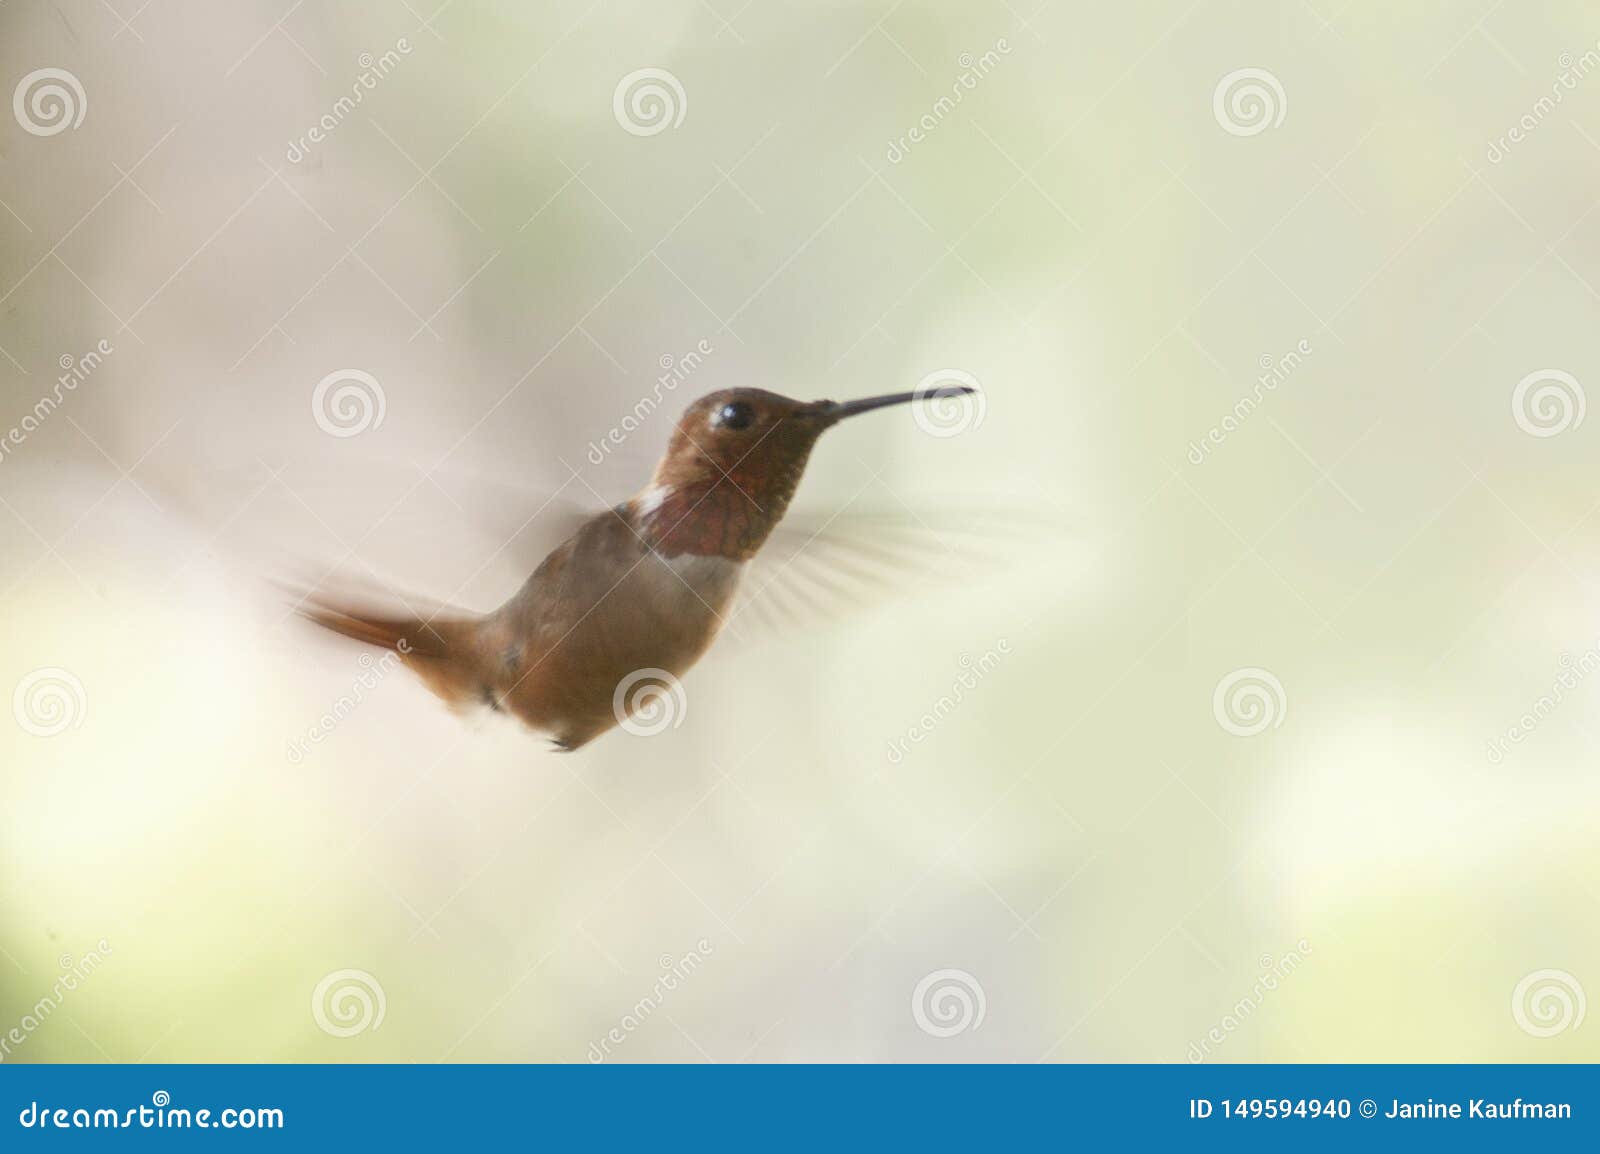 tiny ruby throated hummingbird in flight closeup light green background